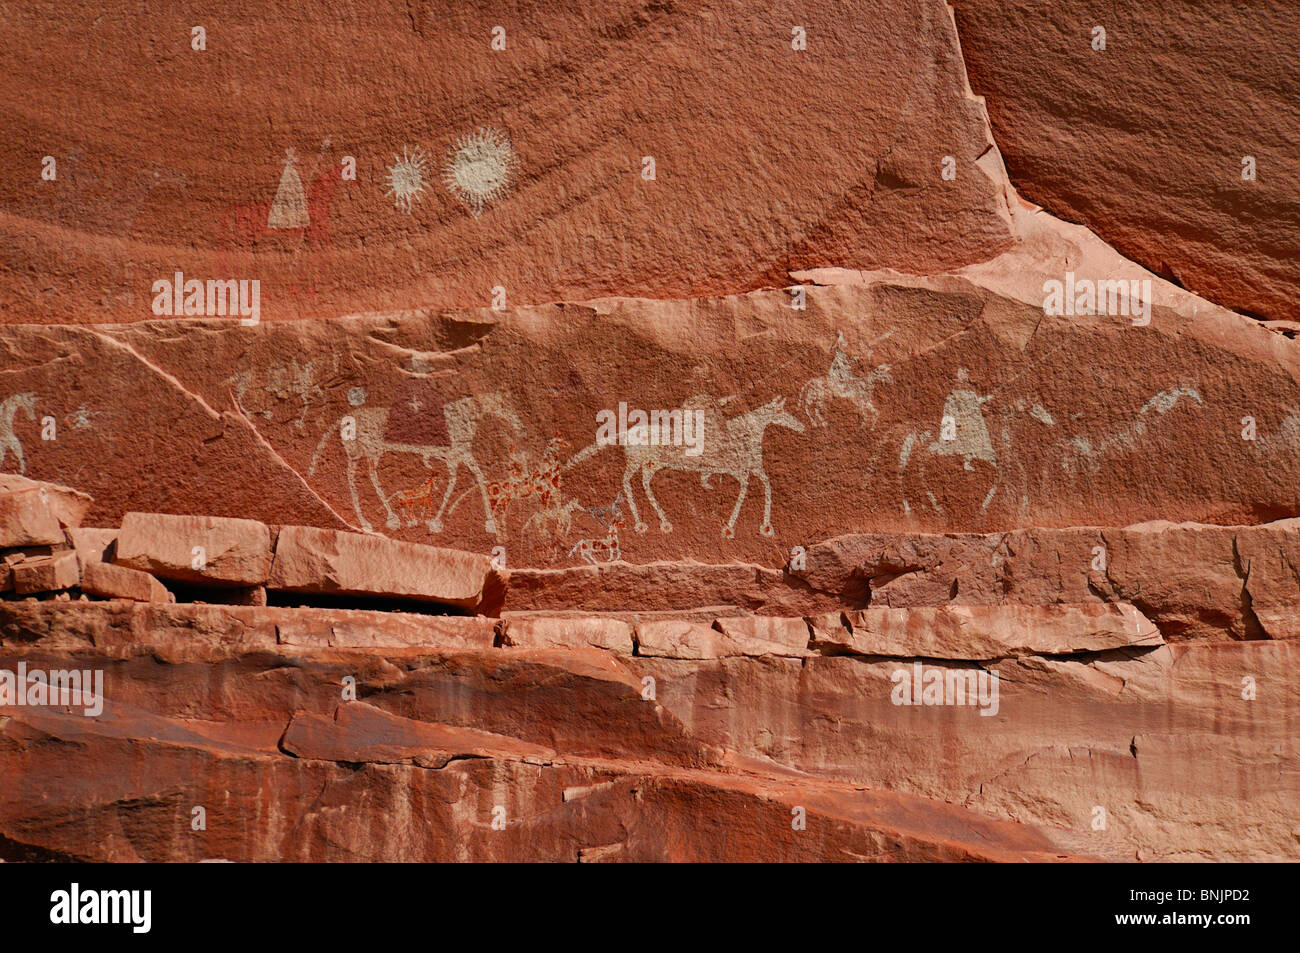 Spanish horsemen pictograph Canyon del Muerto Canyon de Chelly National Monument Arizona USA America North America travel stone Stock Photo